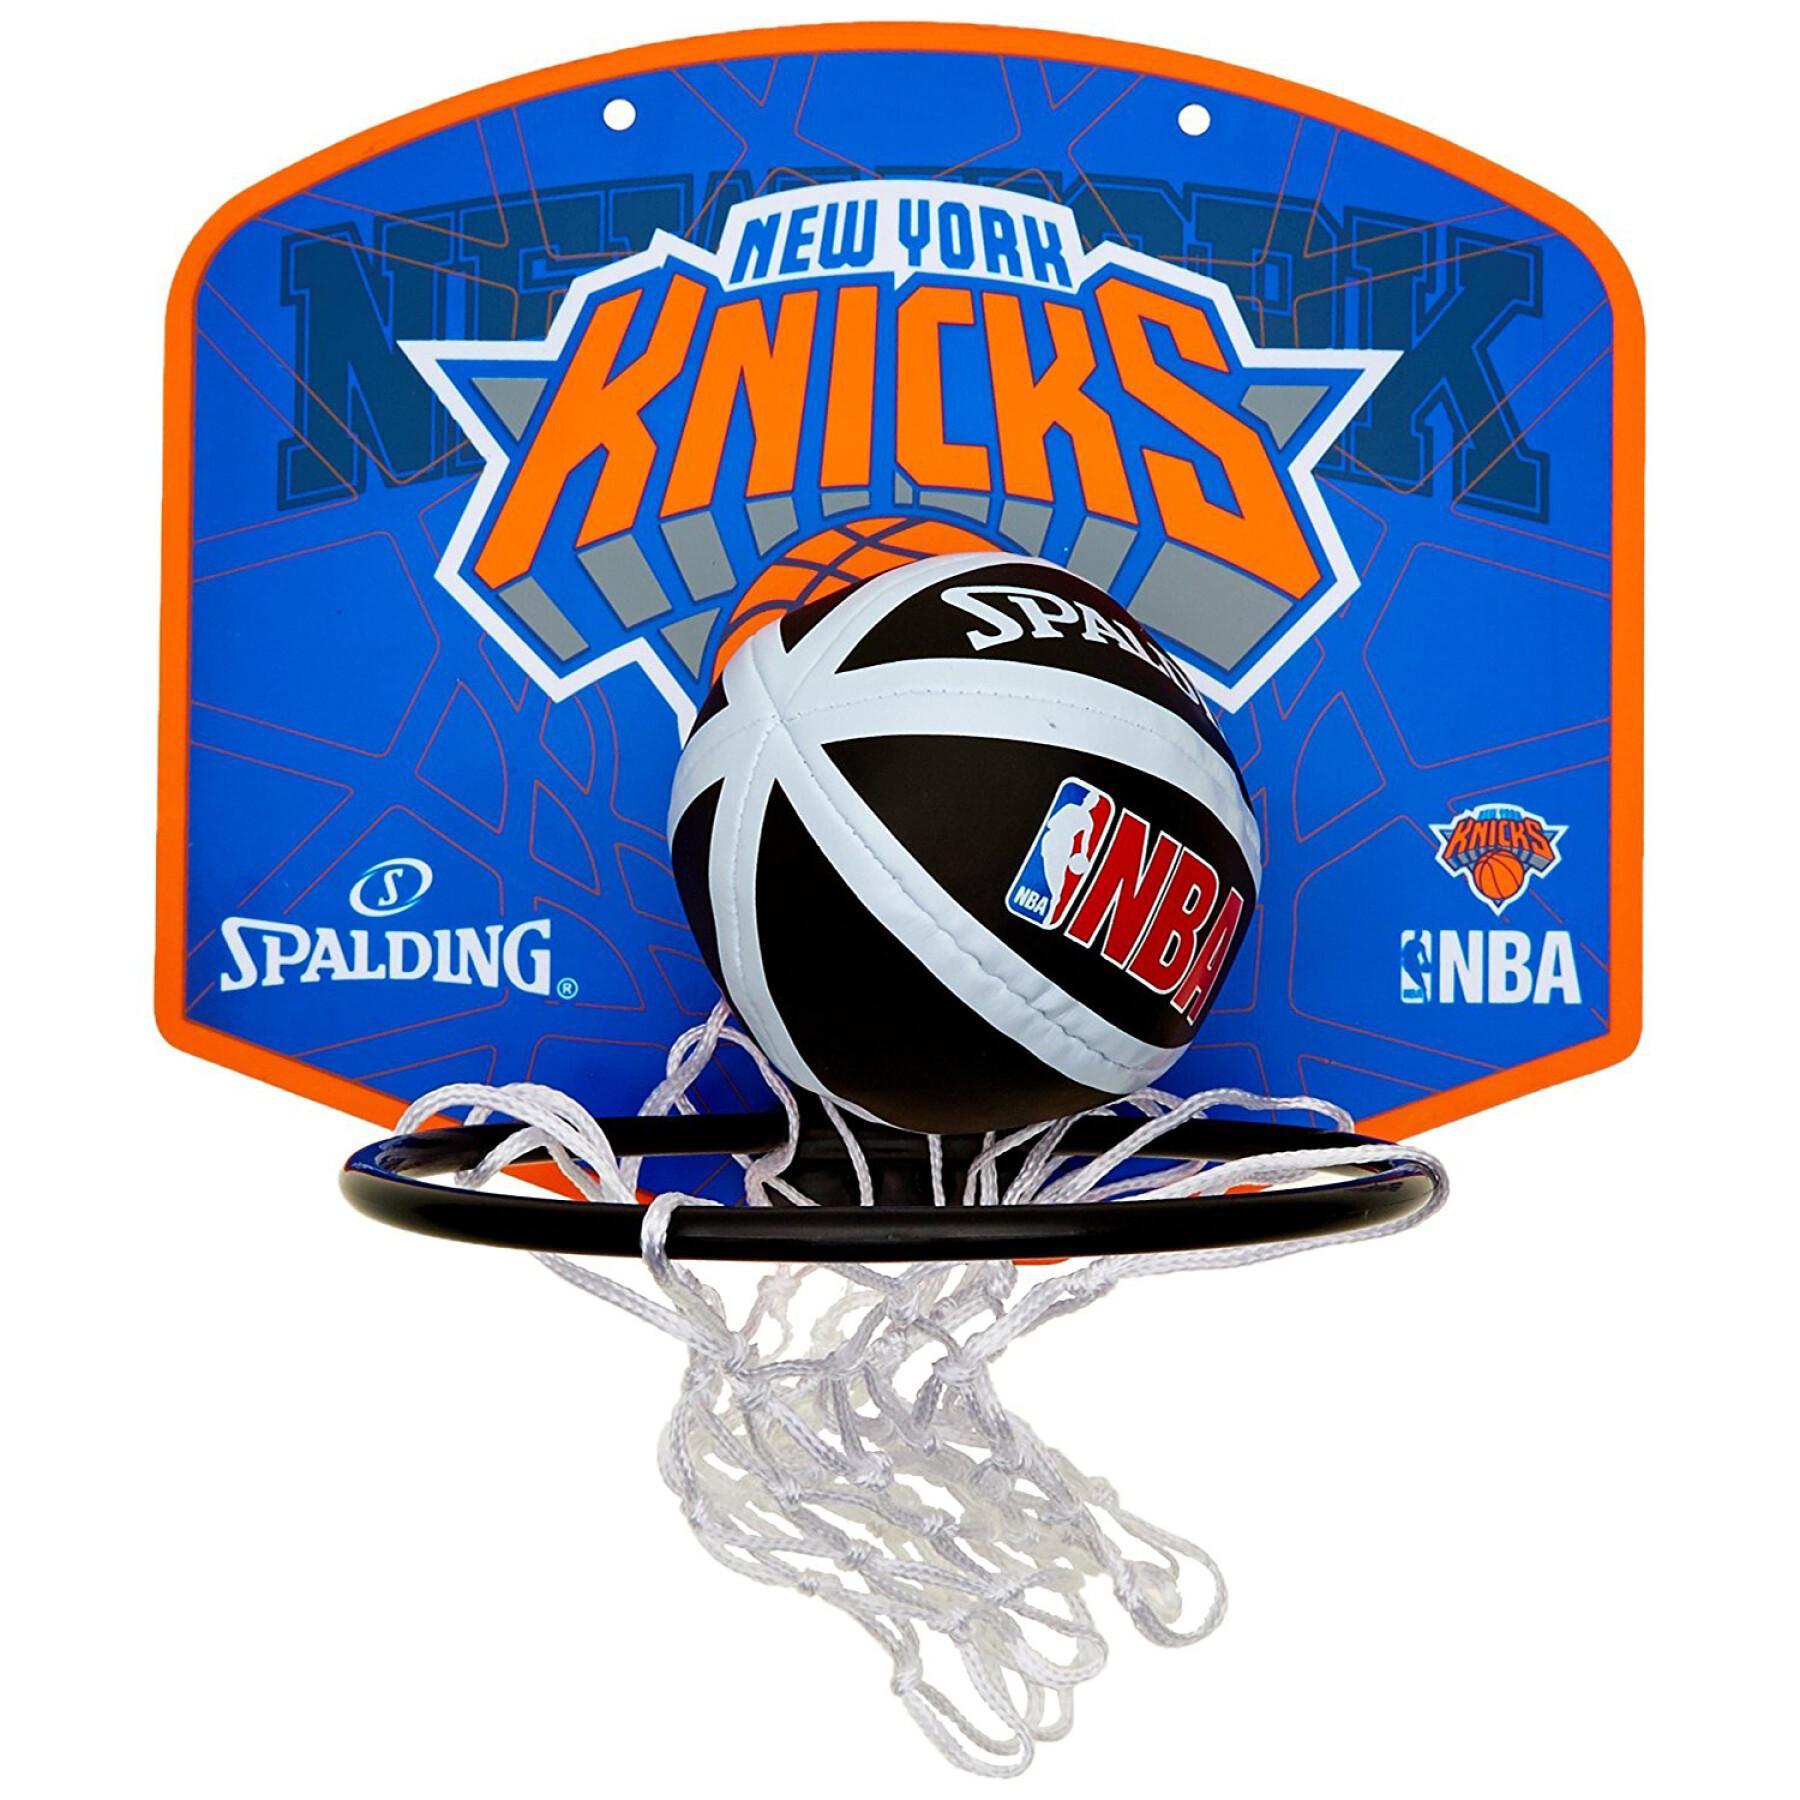 Mini koszyk Spalding NBANewYork Knicks